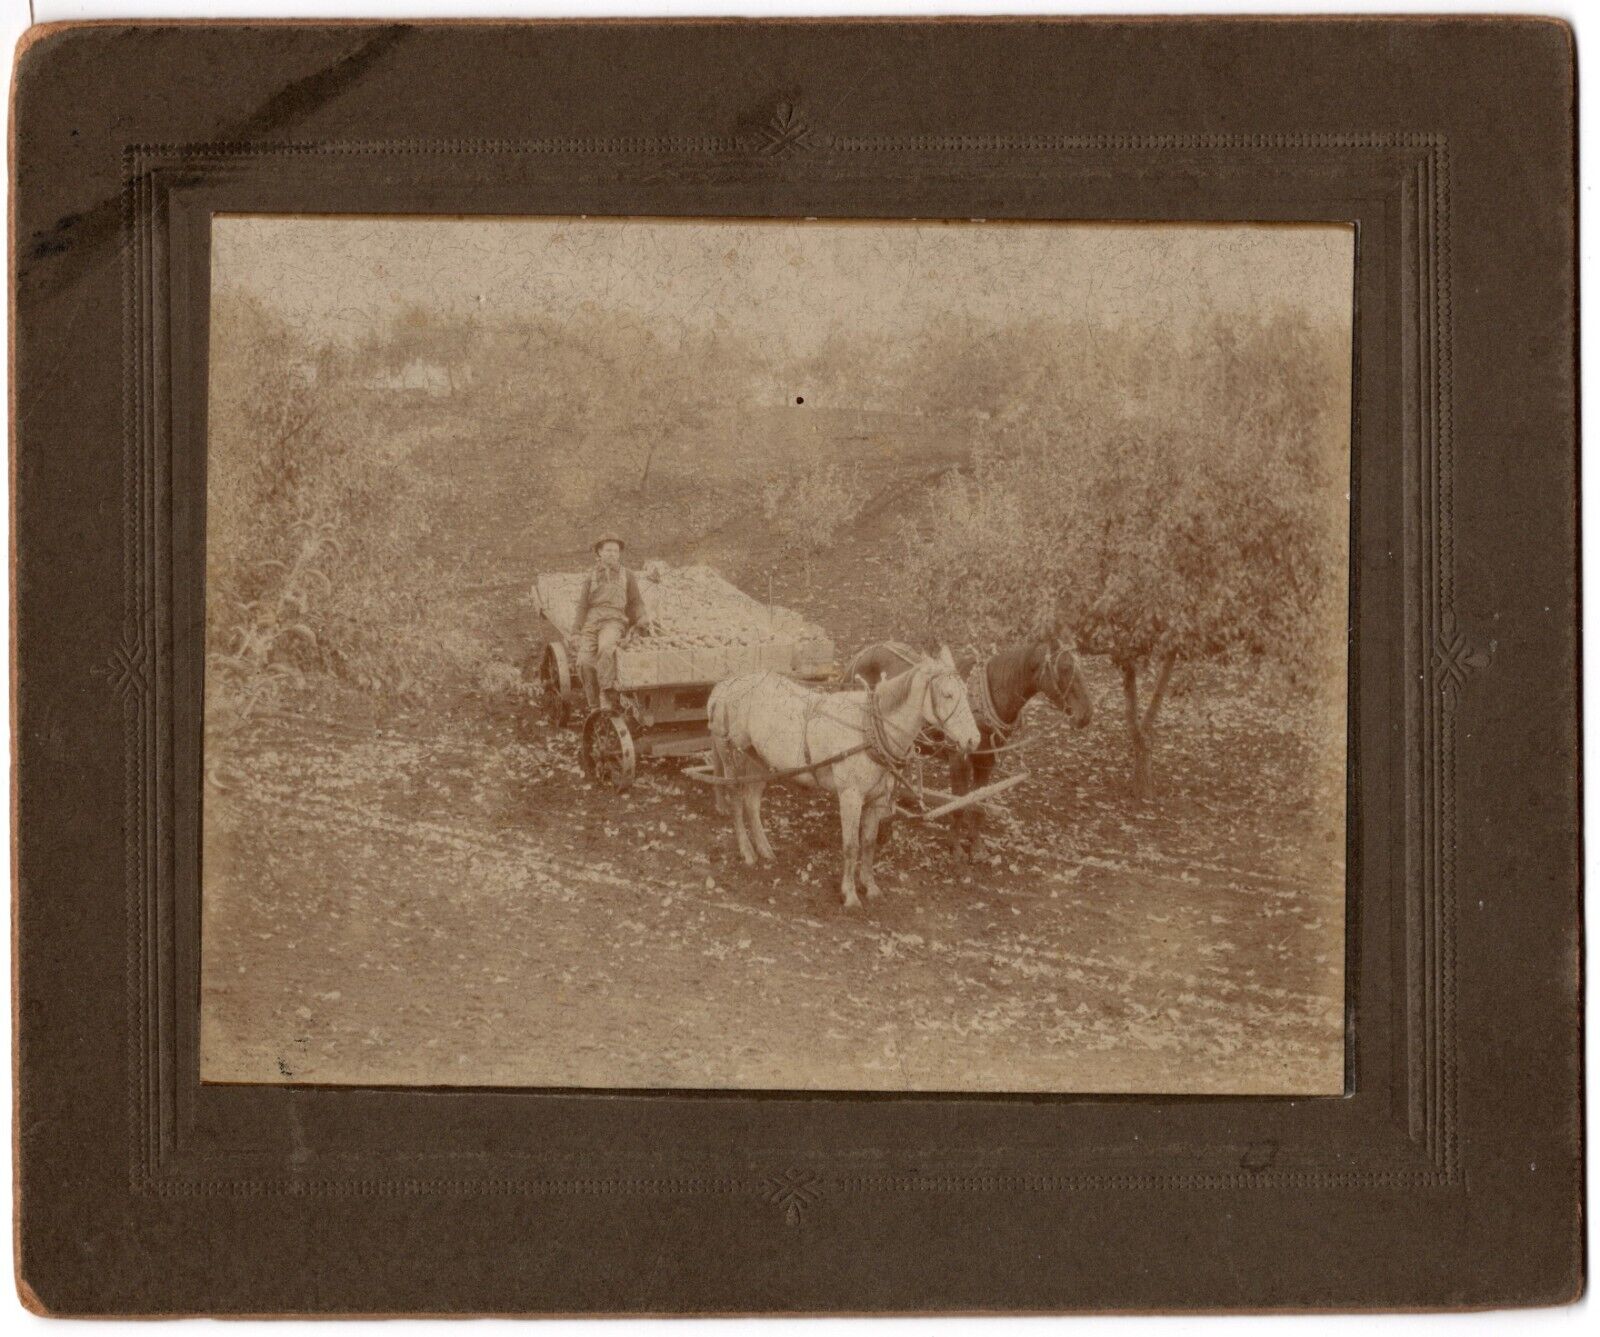 CIRCA 1890s MOUNTED BOARD PHOTO MAN CARRYING POTATOS ON HORSE WAGON WITH DOG